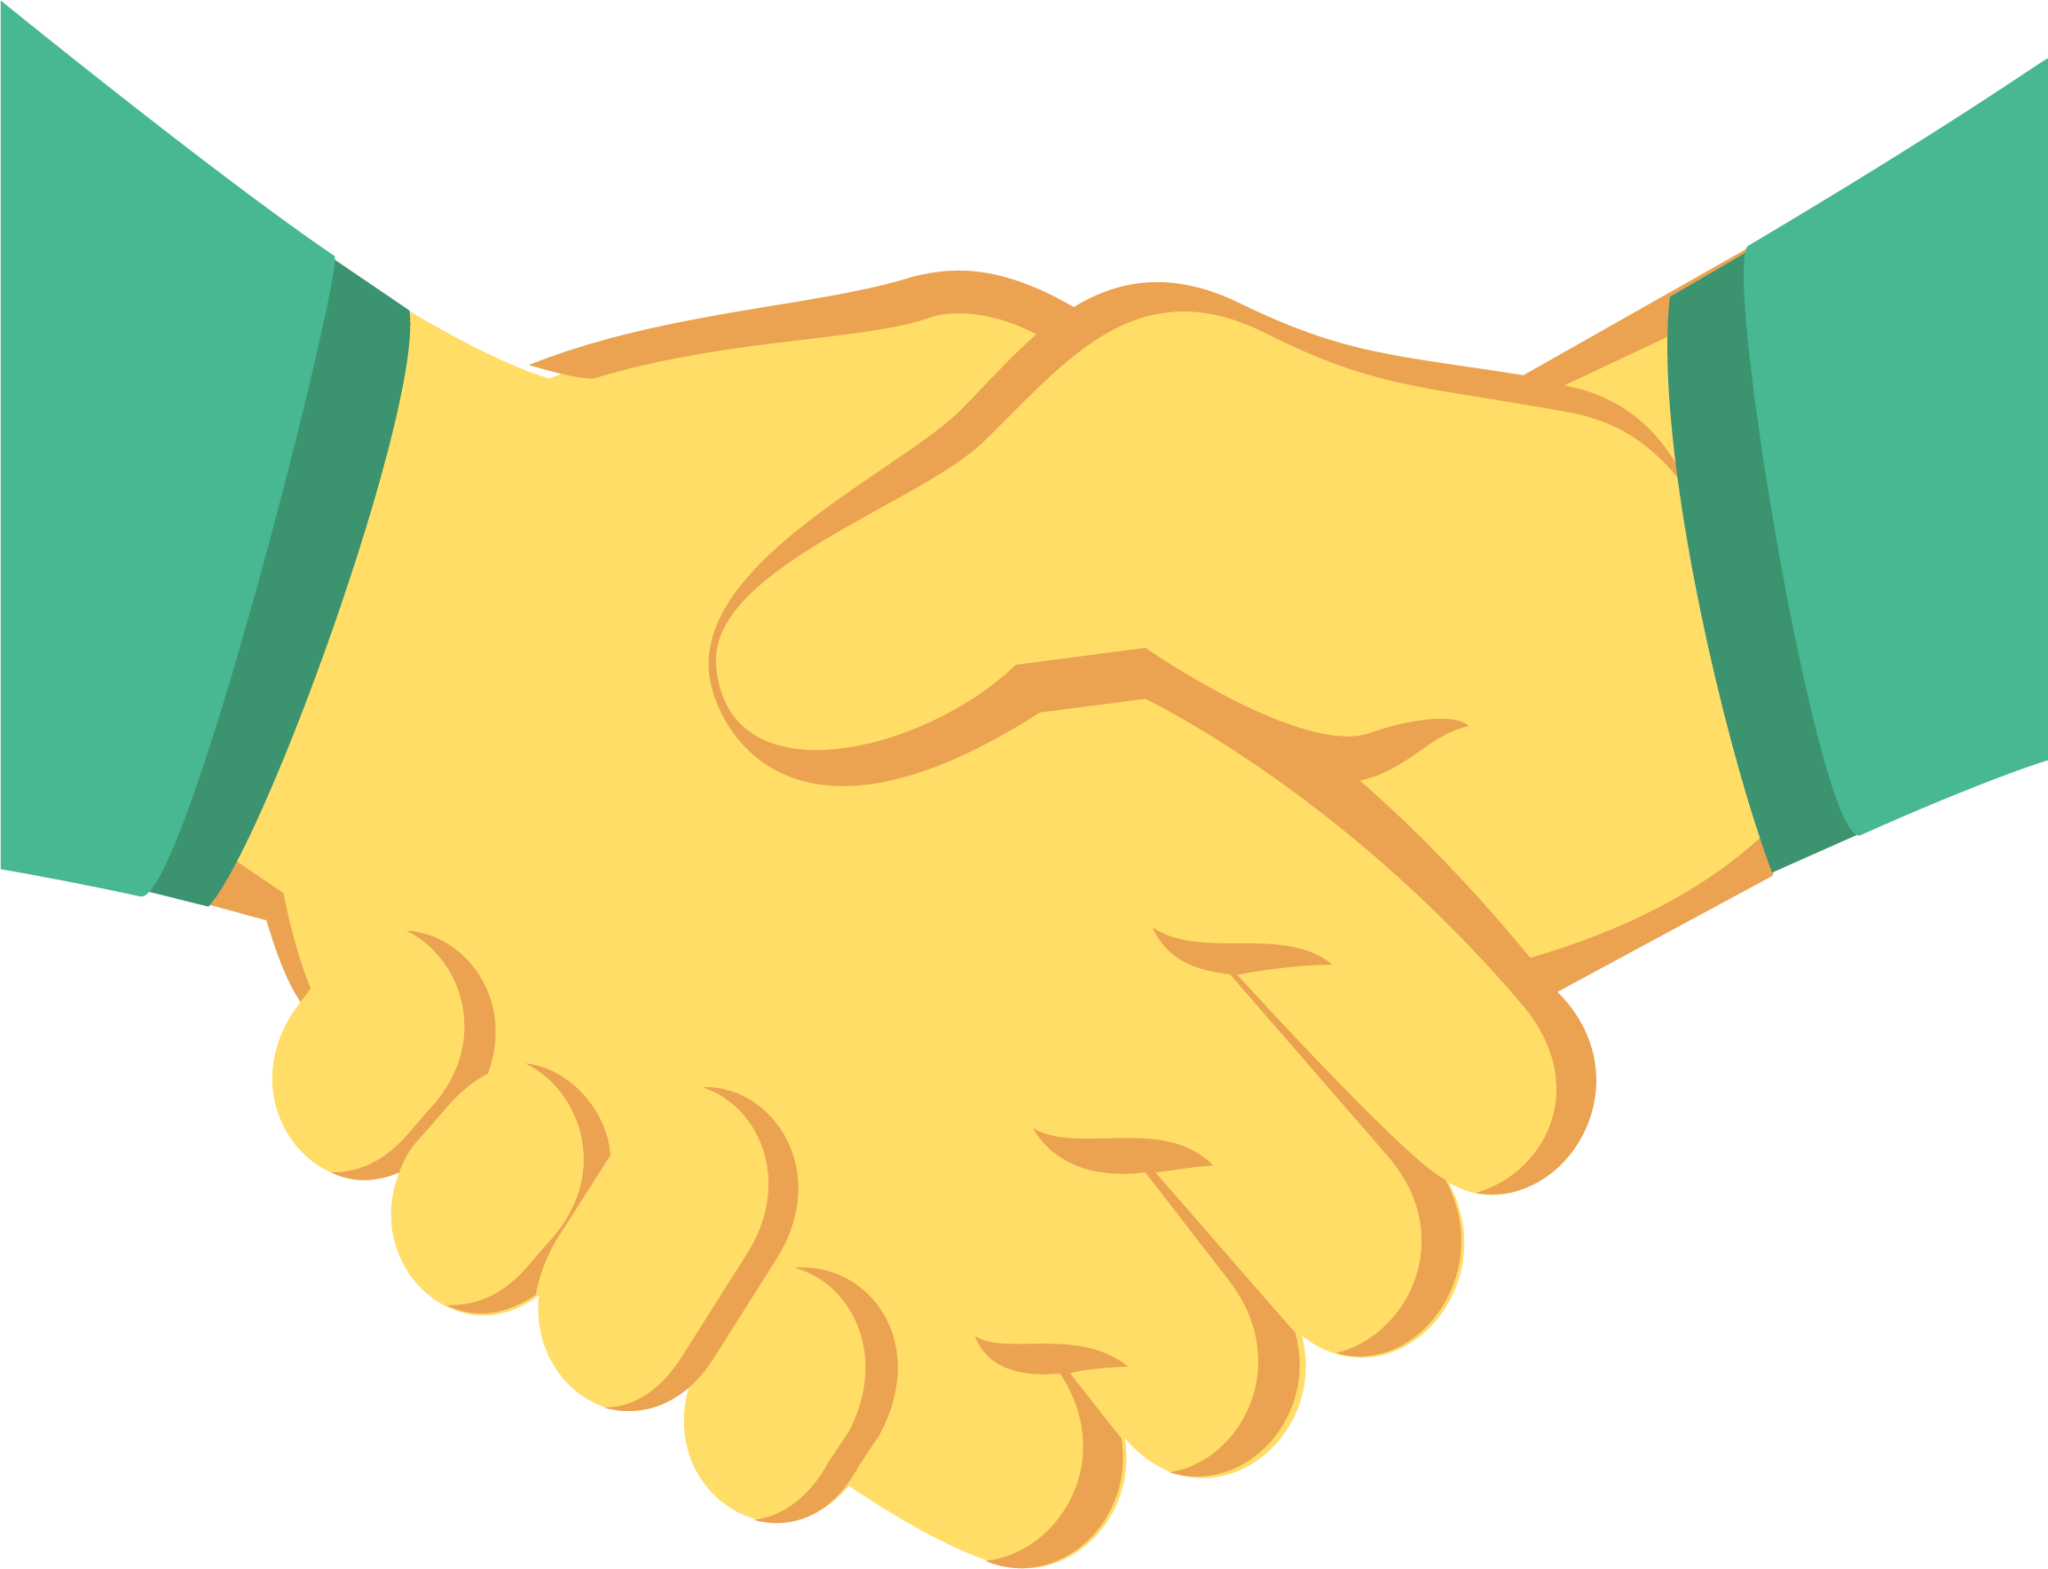 Handshake Icon. Hand Gesture Emoji Vector Illustration. Royalty Free SVG,  Cliparts, Vectors, and Stock Illustration. Image 168712206.